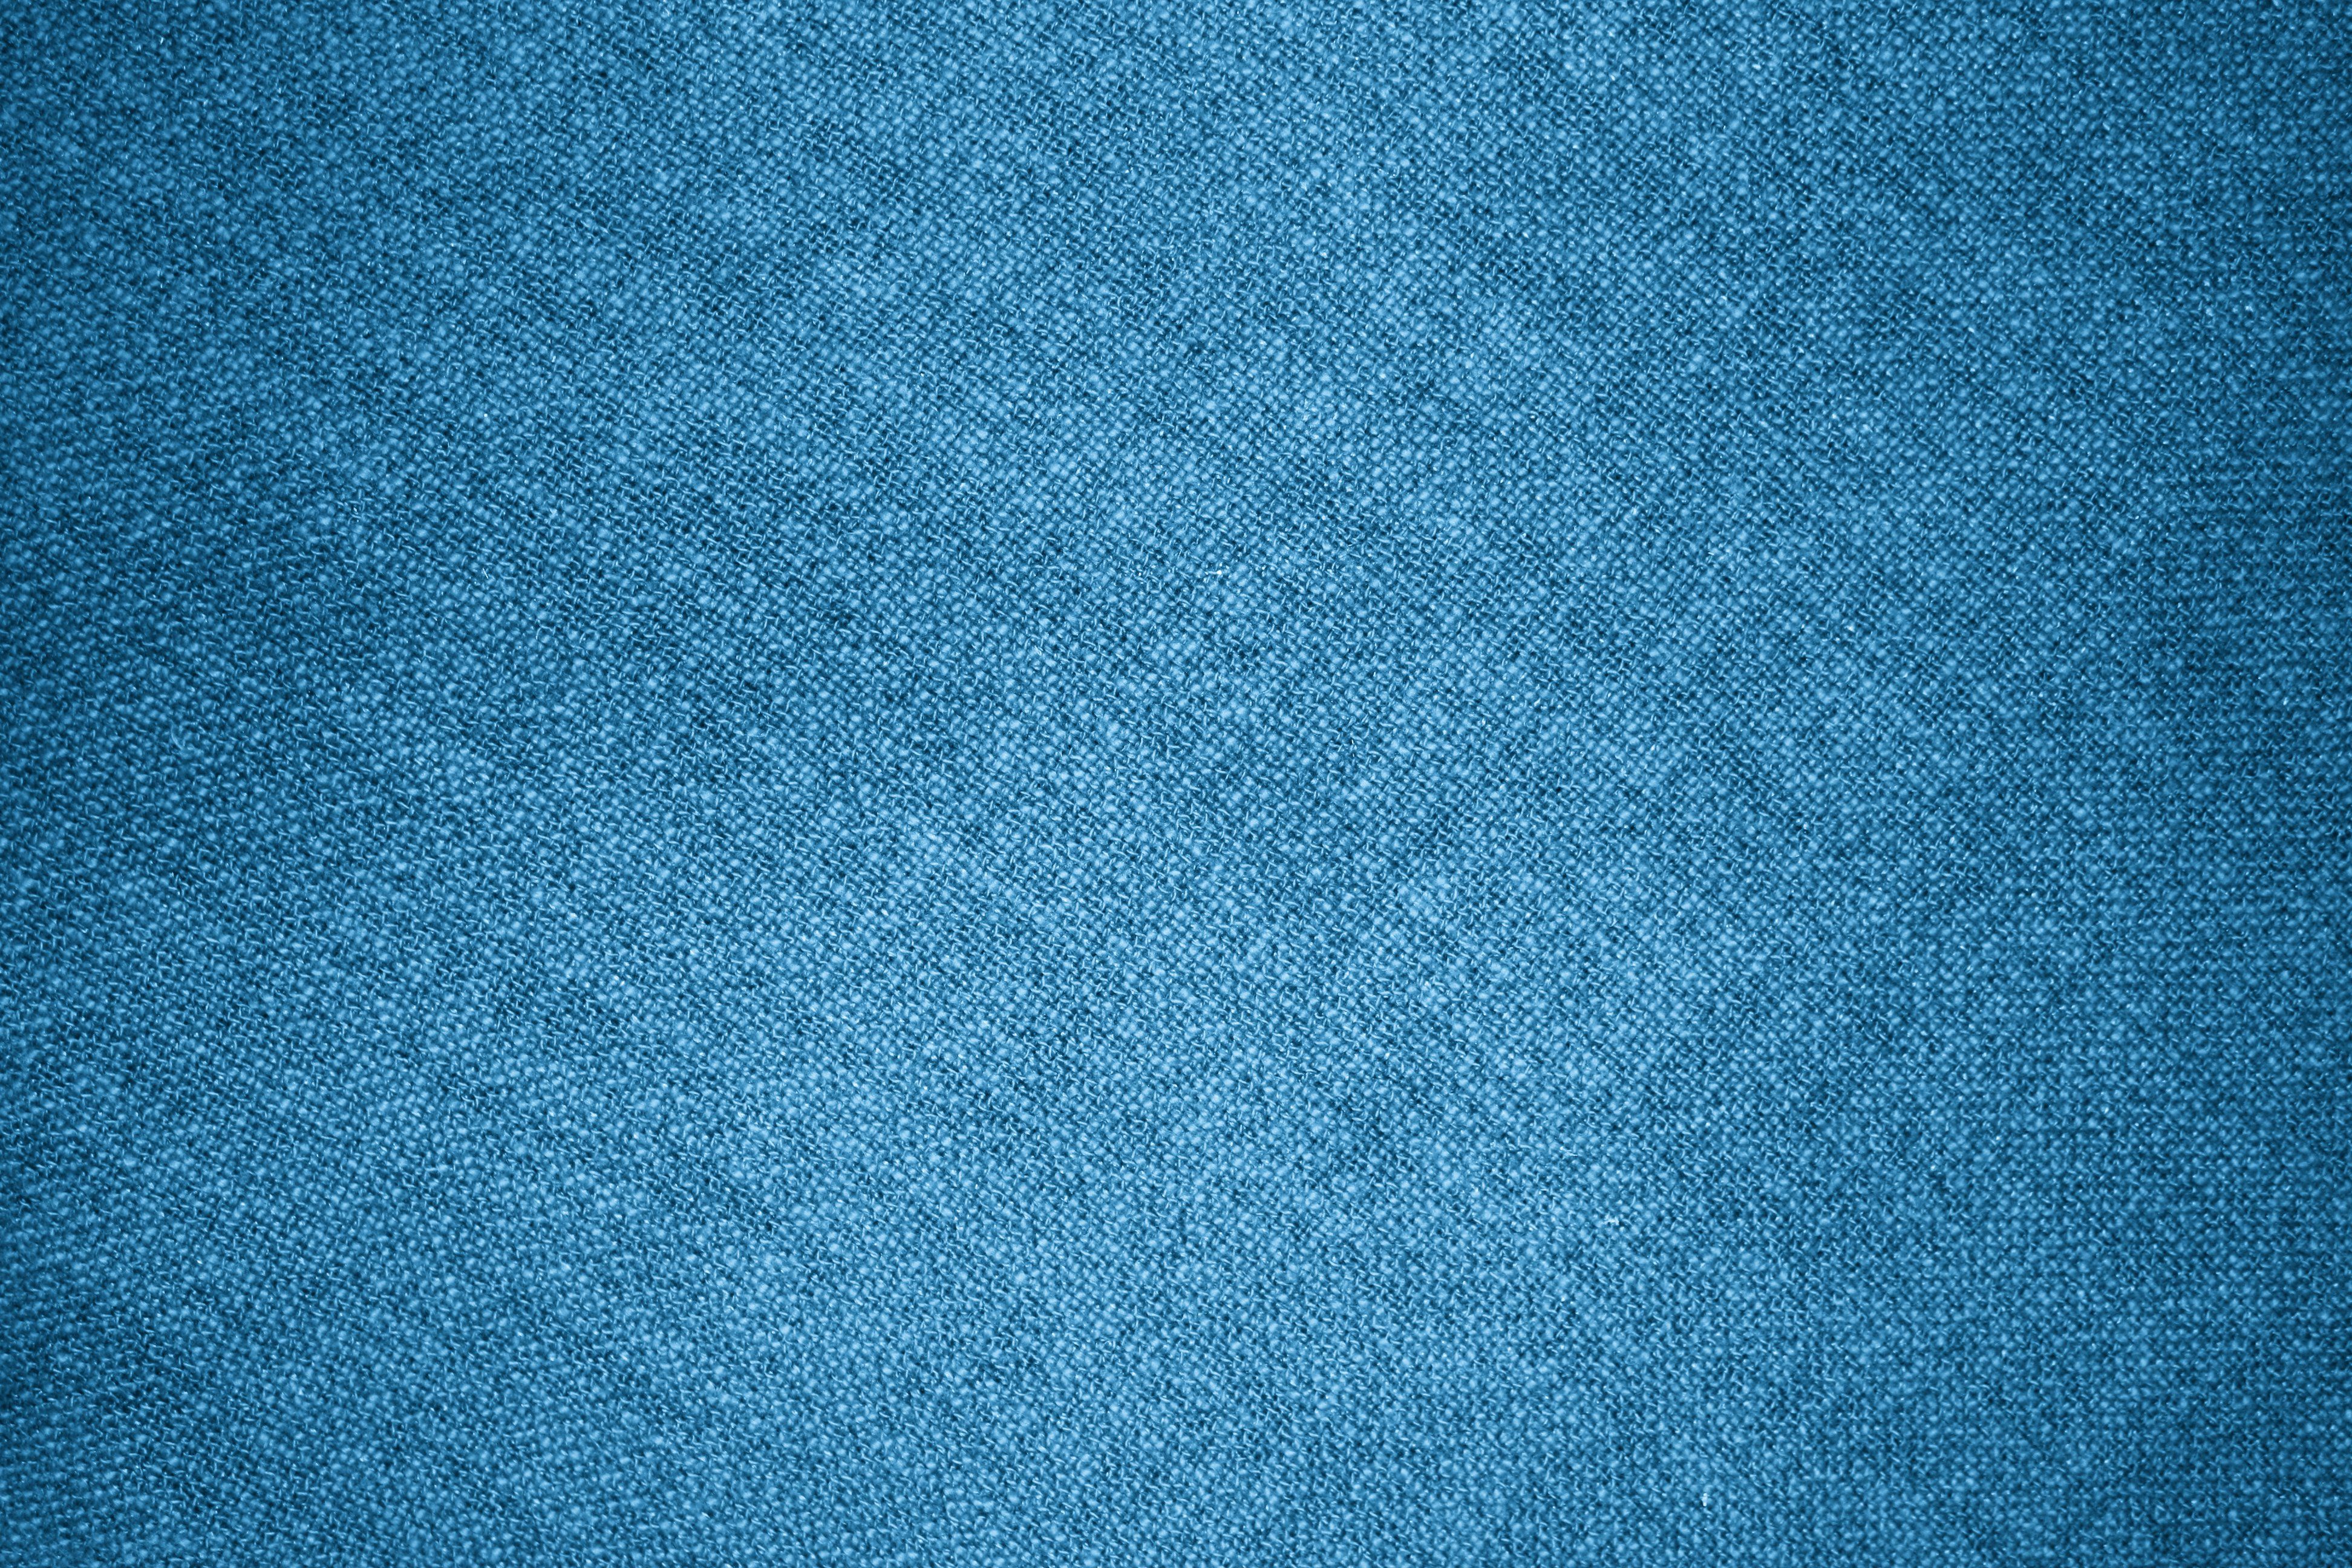 Azure Blue Fabric Texture - Free High Resolution Photo | Art ...